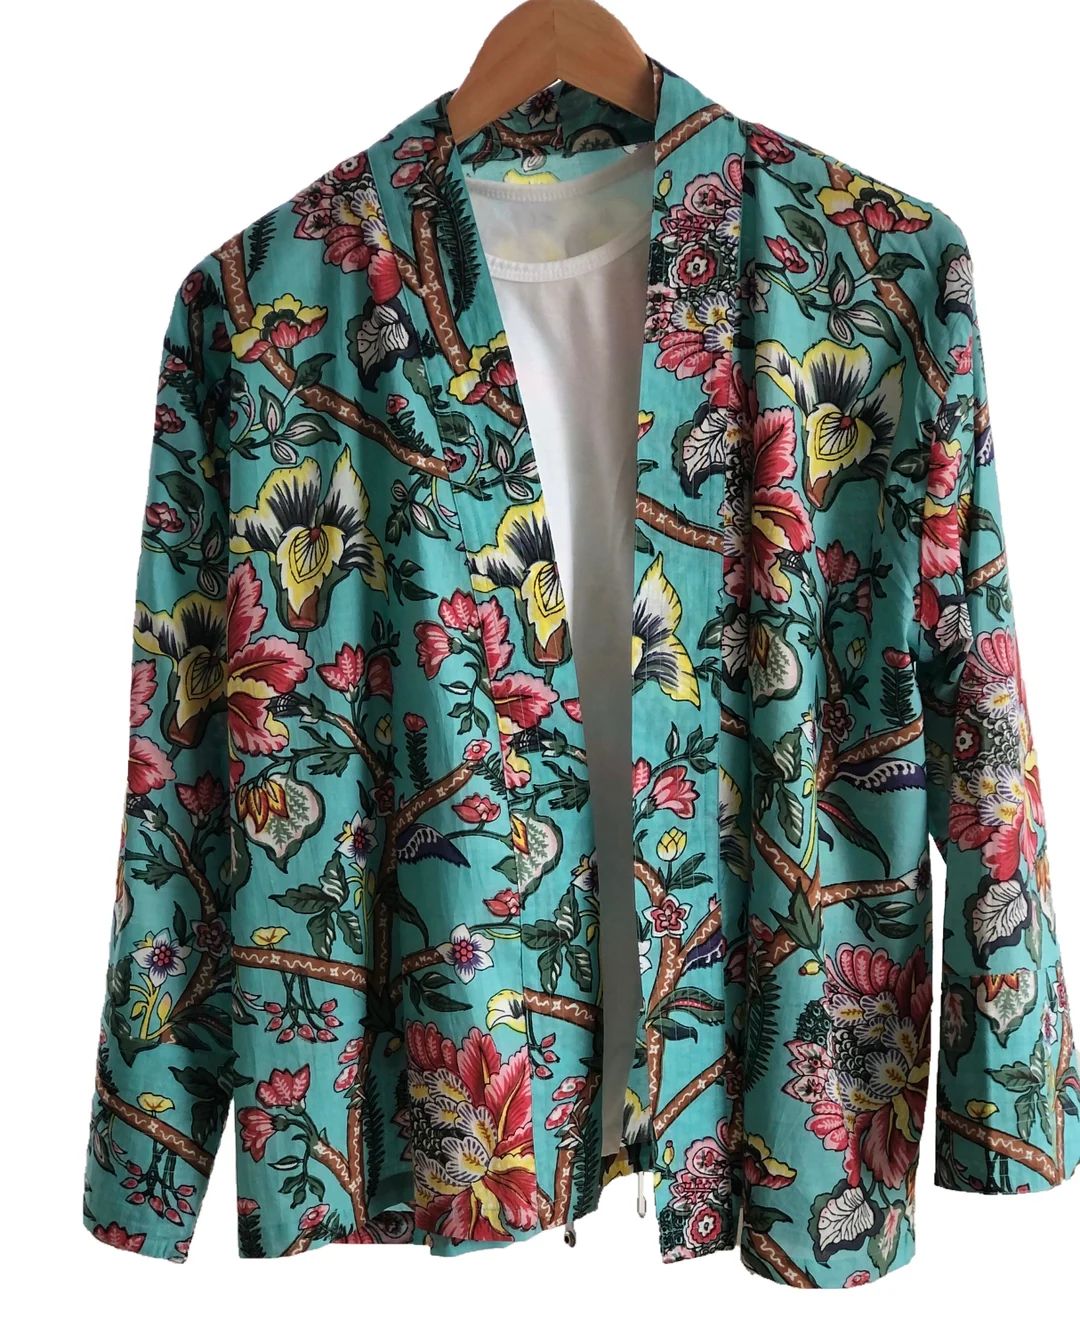 Cotton Kimono Jacket in Turquoise With Pink and Yellow Flowers - Etsy UK | Etsy (UK)